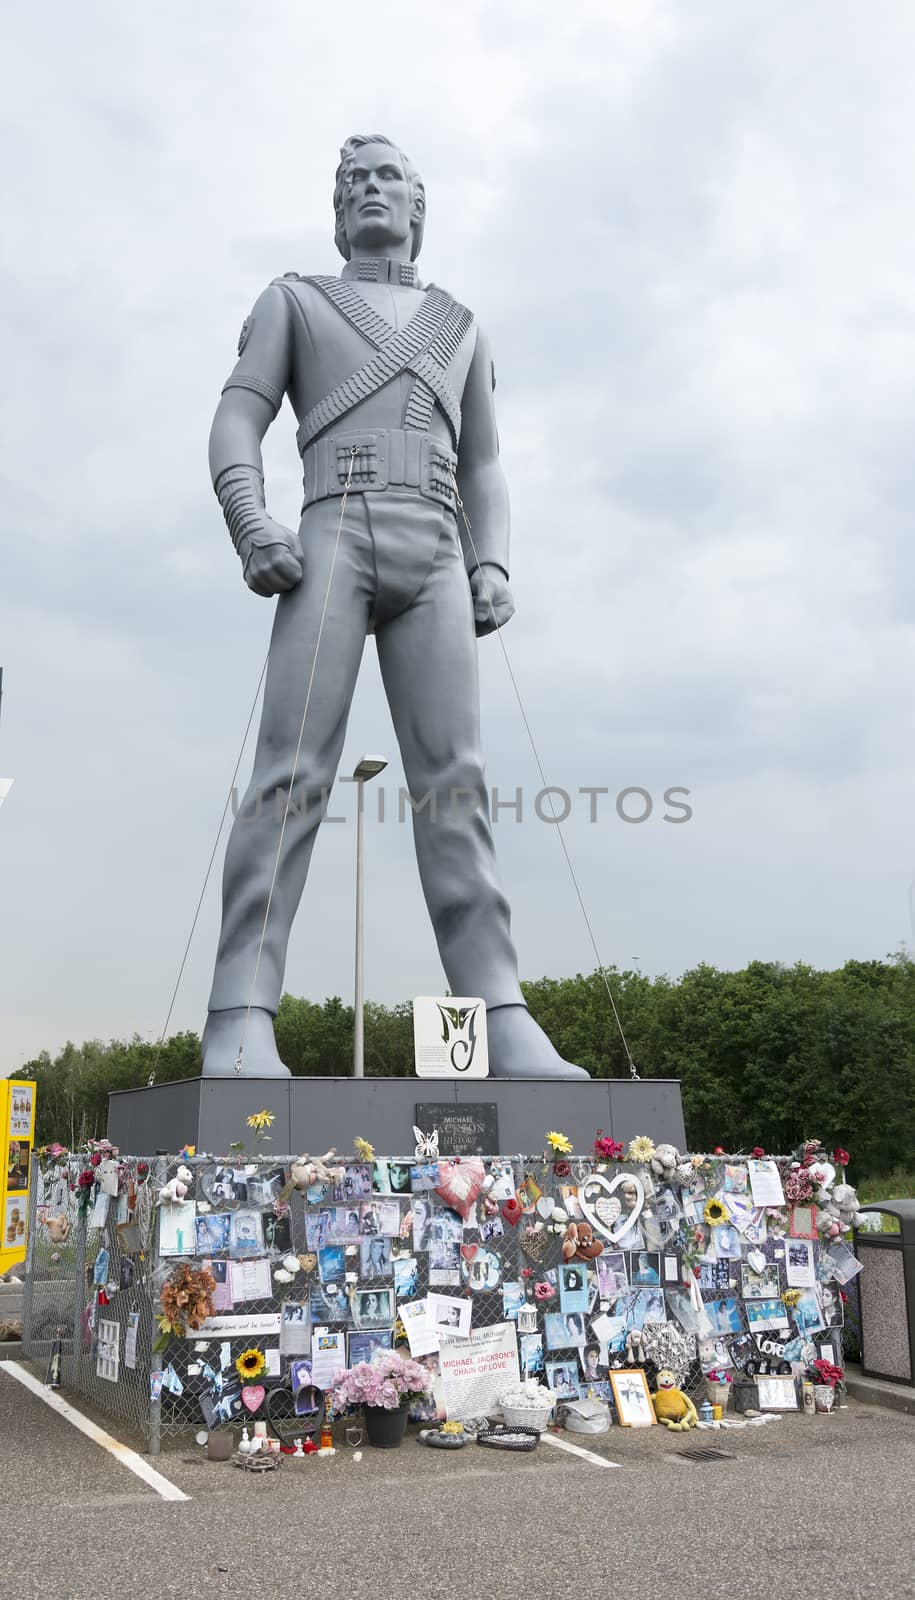 michael jackson statue by compuinfoto